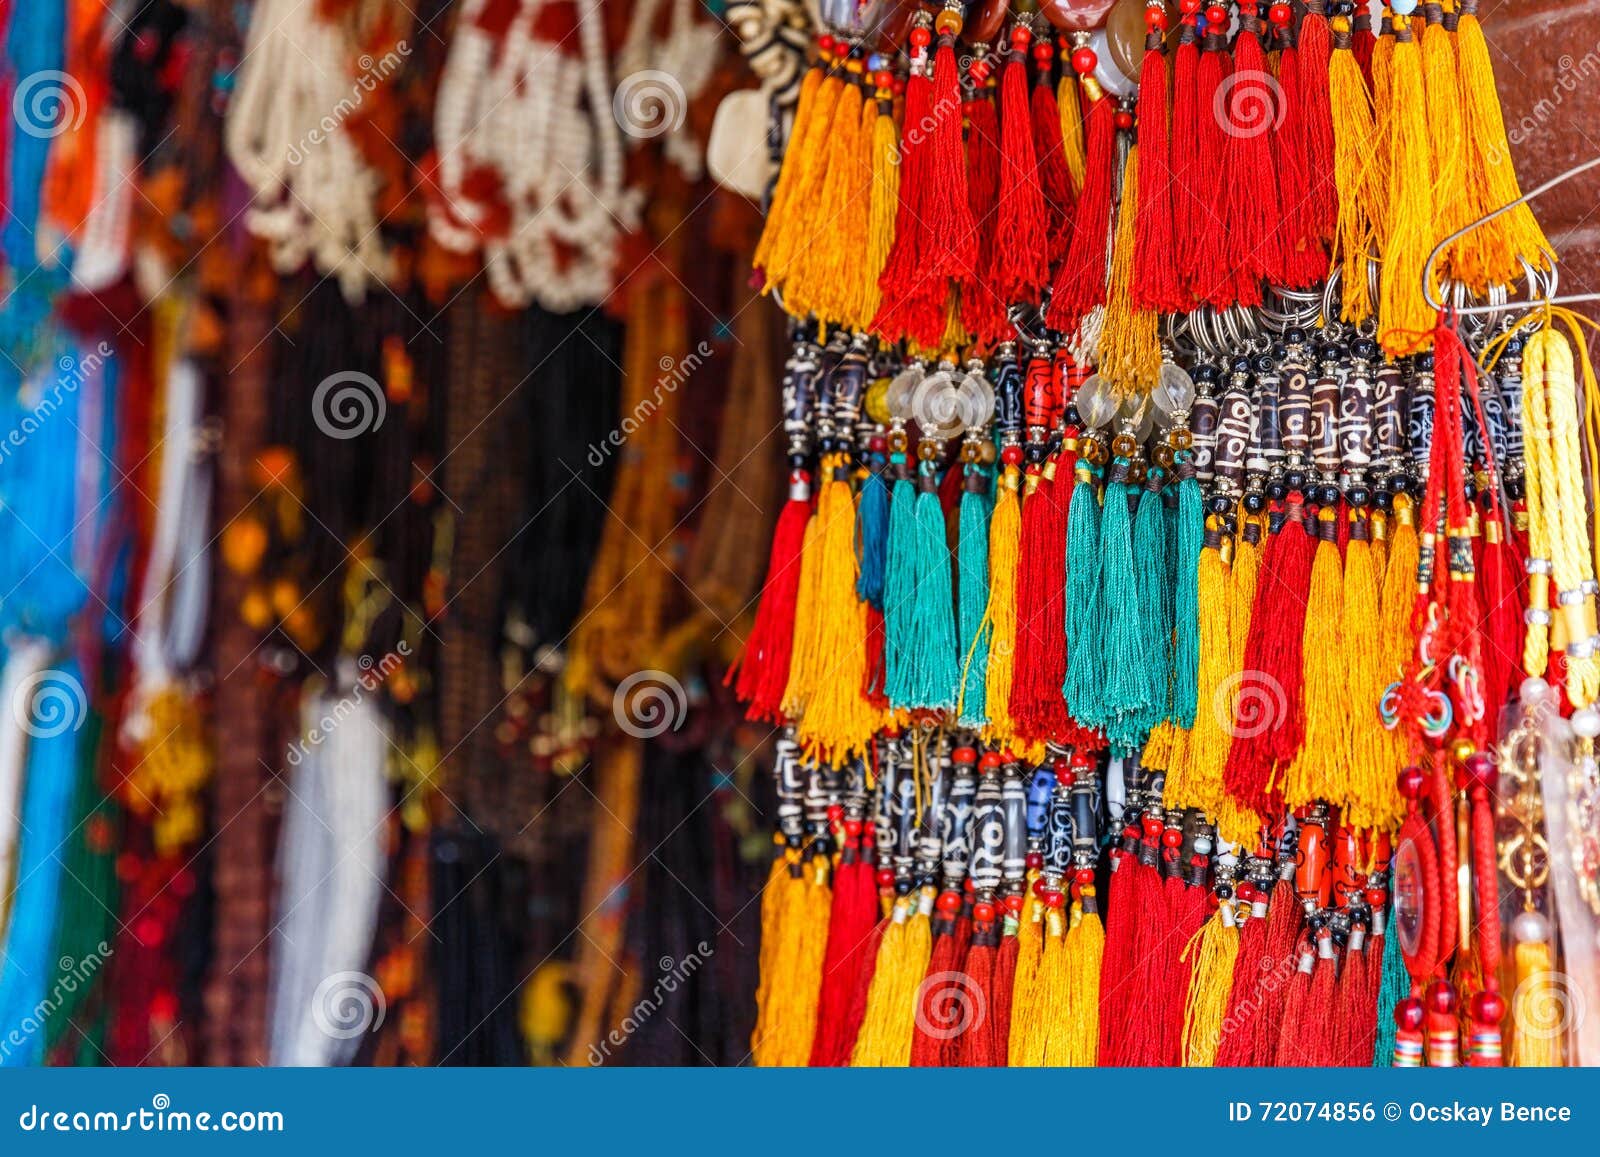 colorful nepalese keyrings